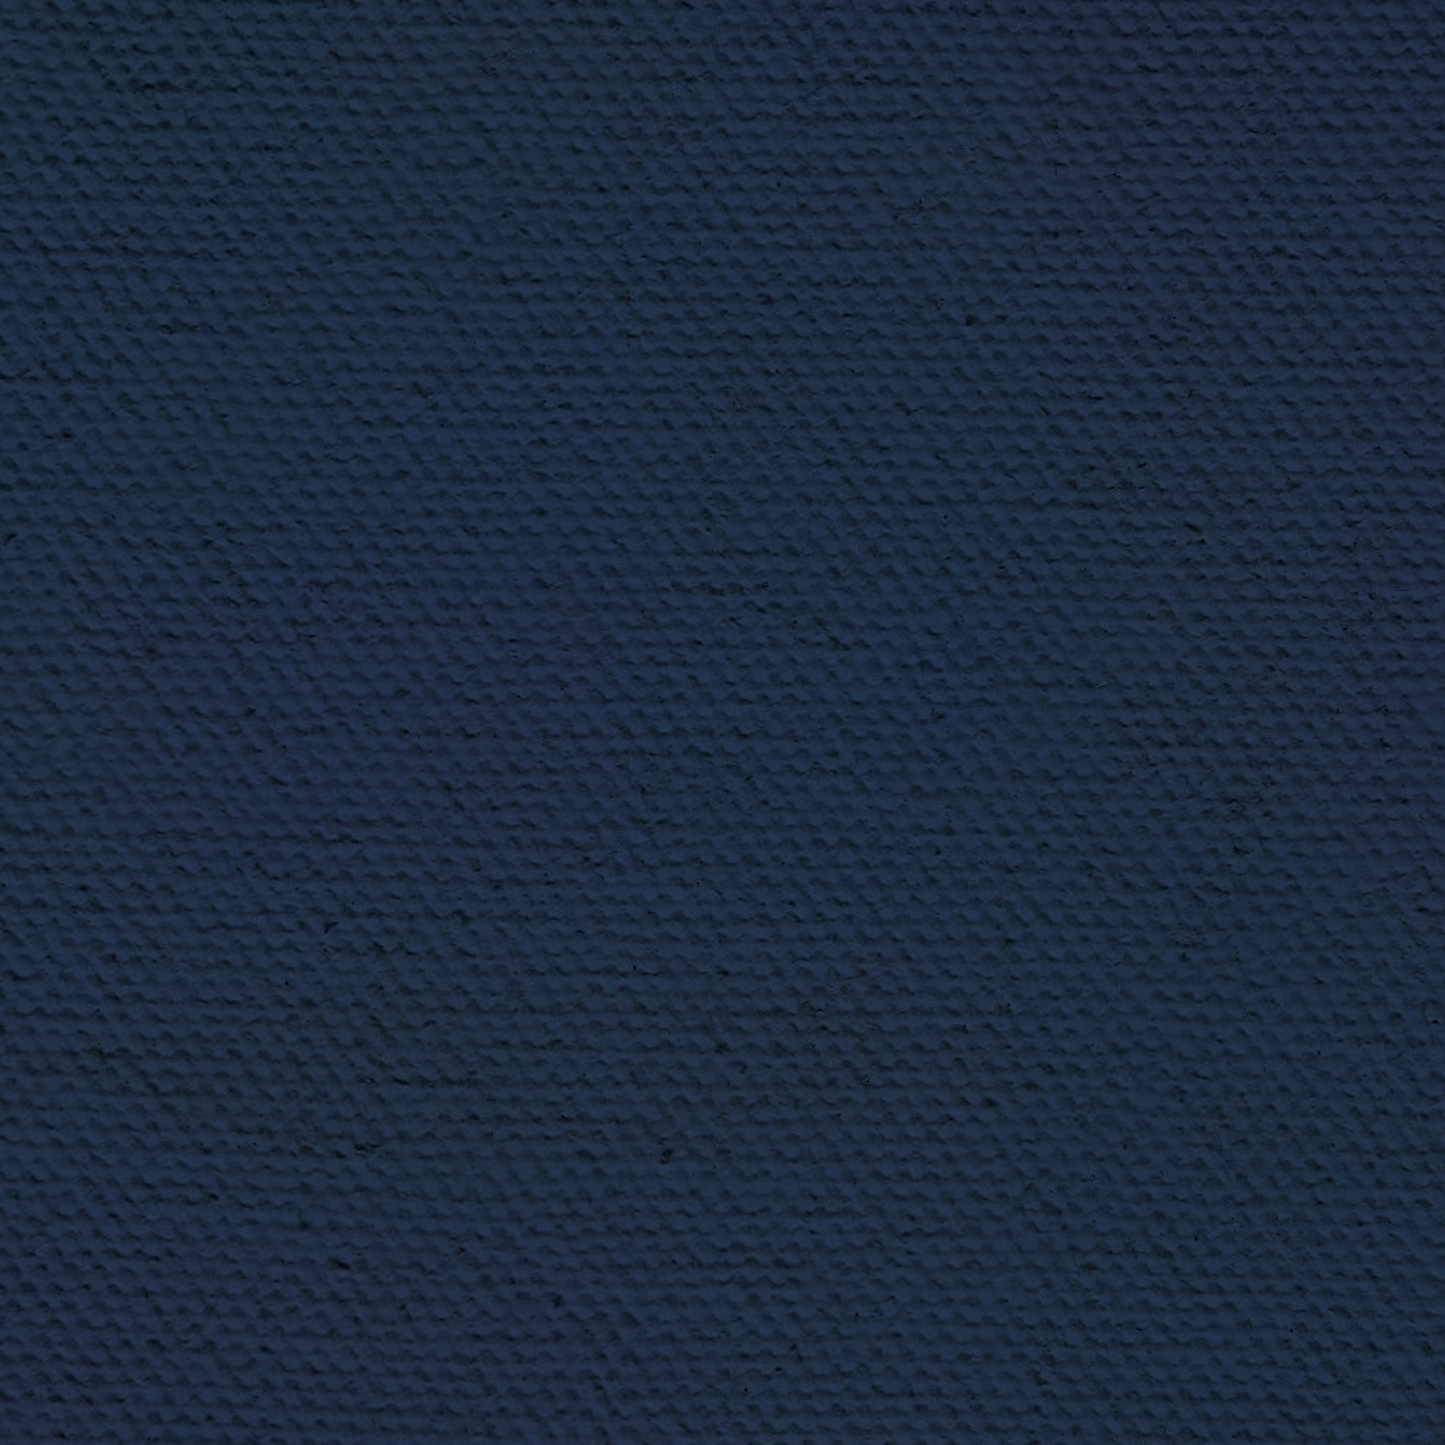 Navy 12oz Canvas - Standard Tote - Single Sided Screenprint